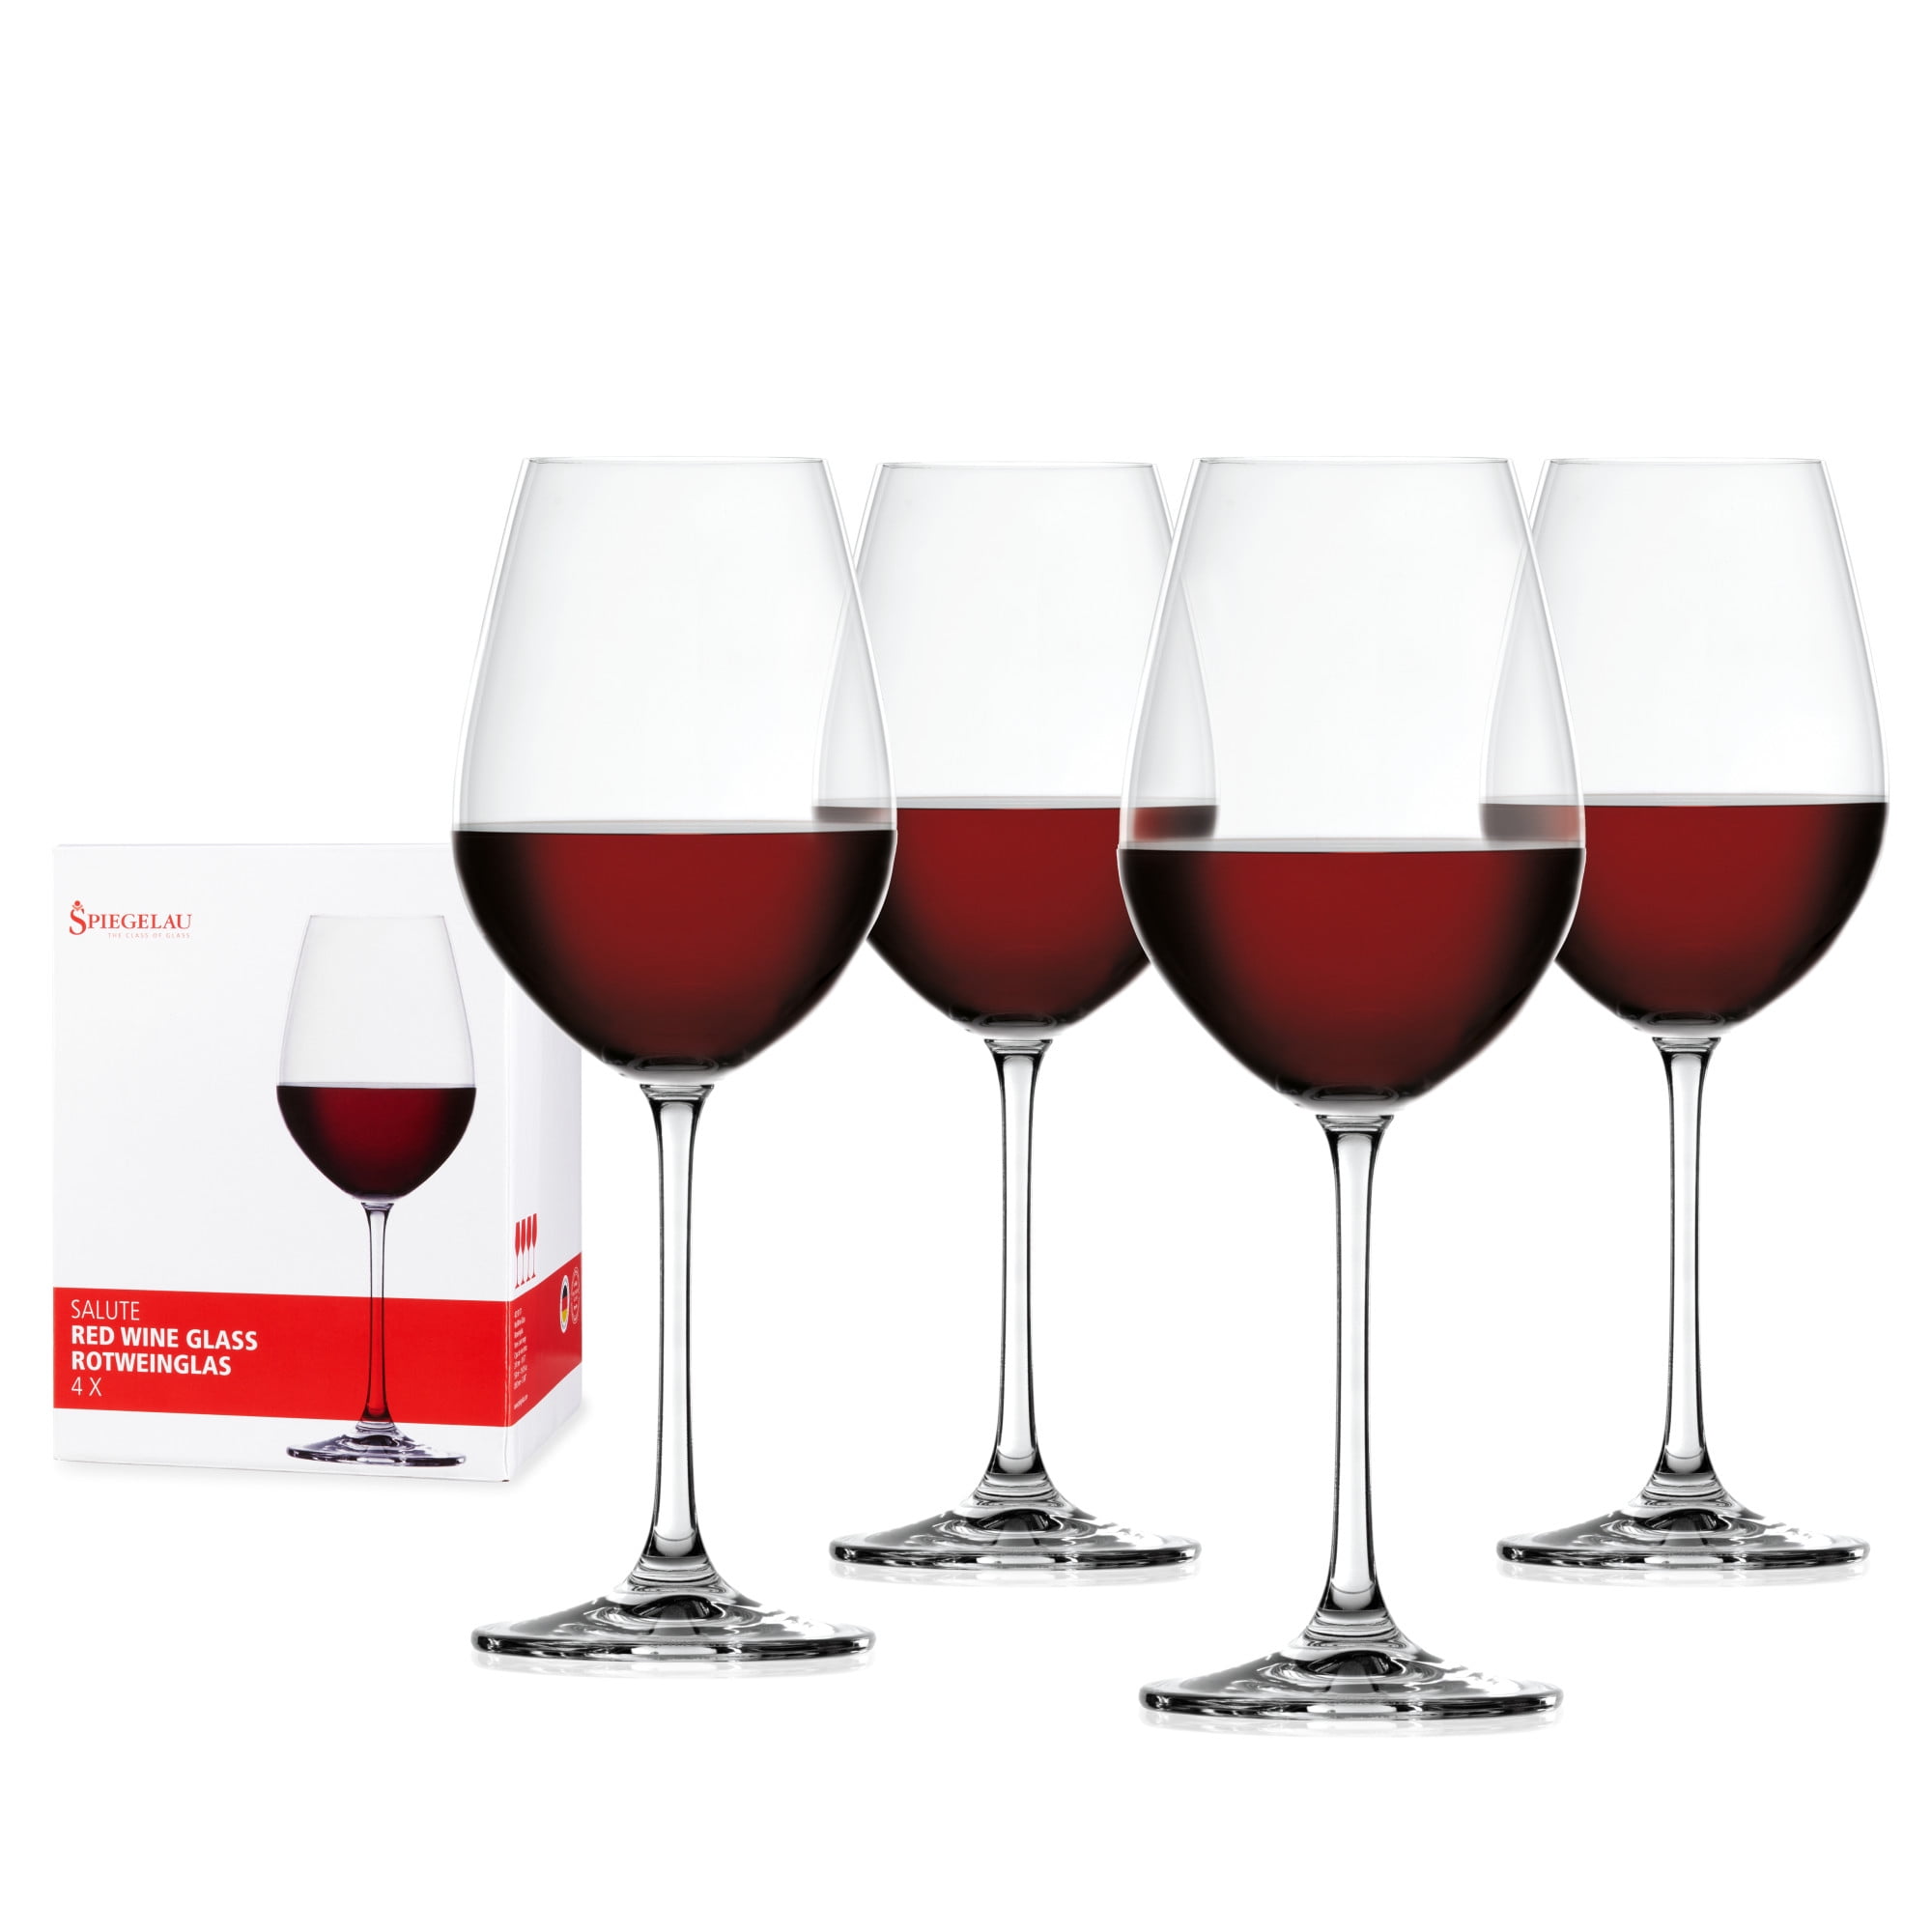 Maestro 12 oz. Stemmed Wine Glassware Set of 4